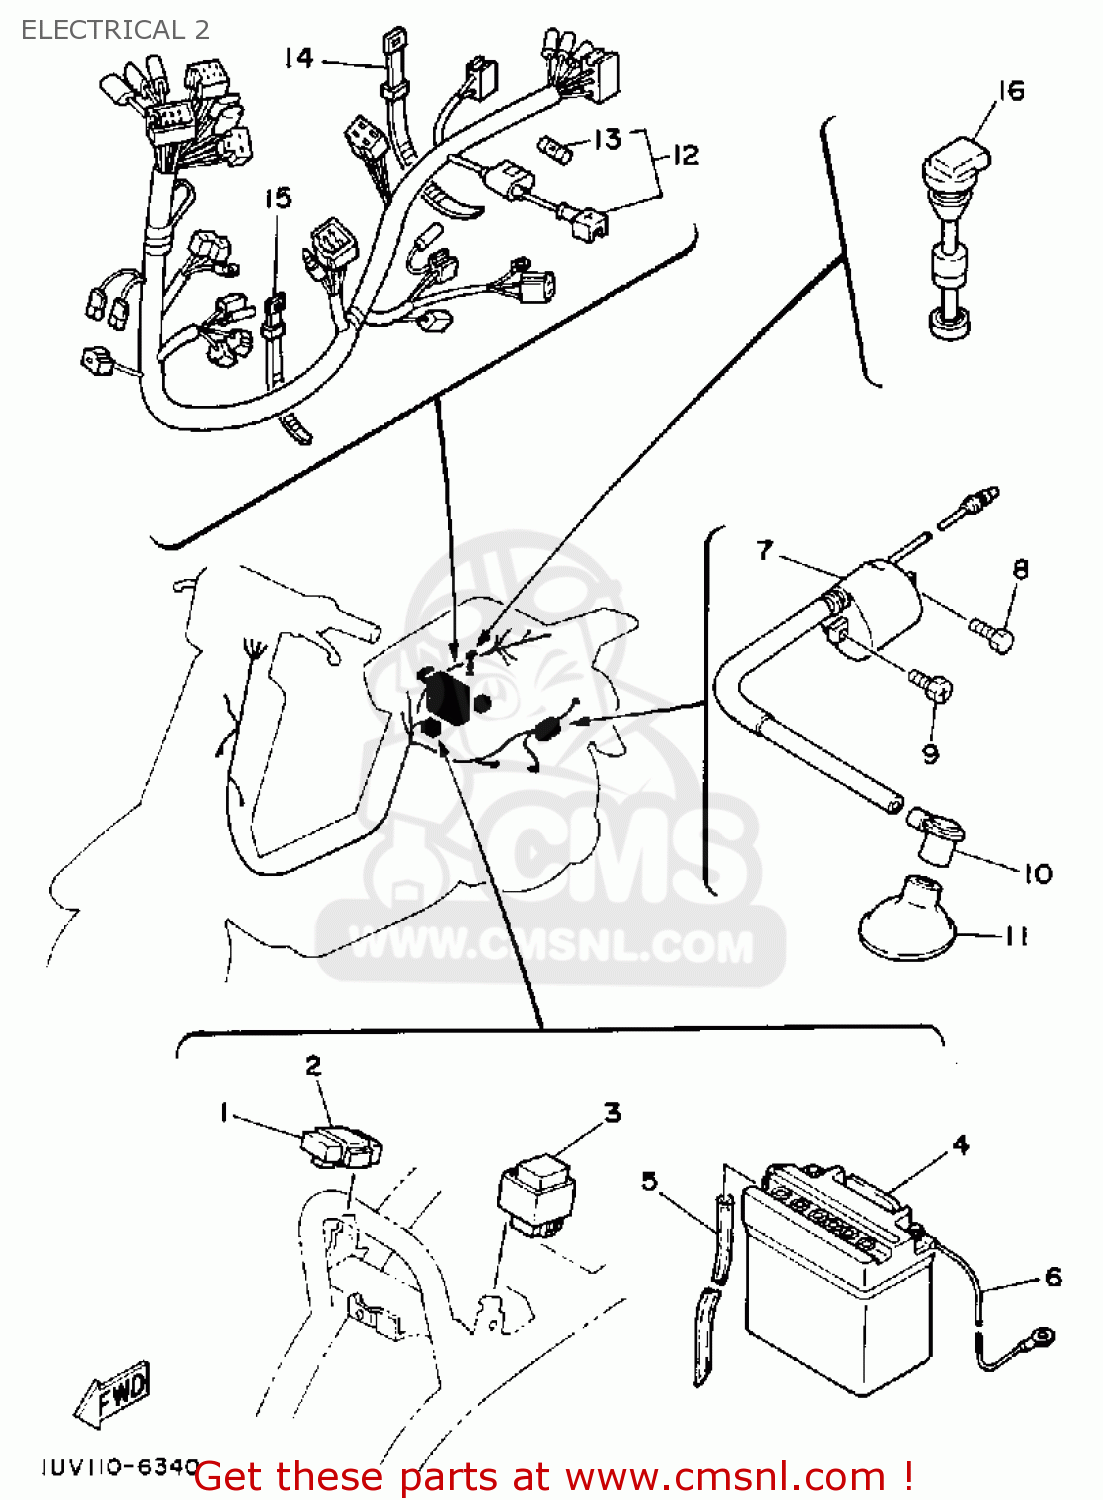 91 yamaha riva wiring diagram